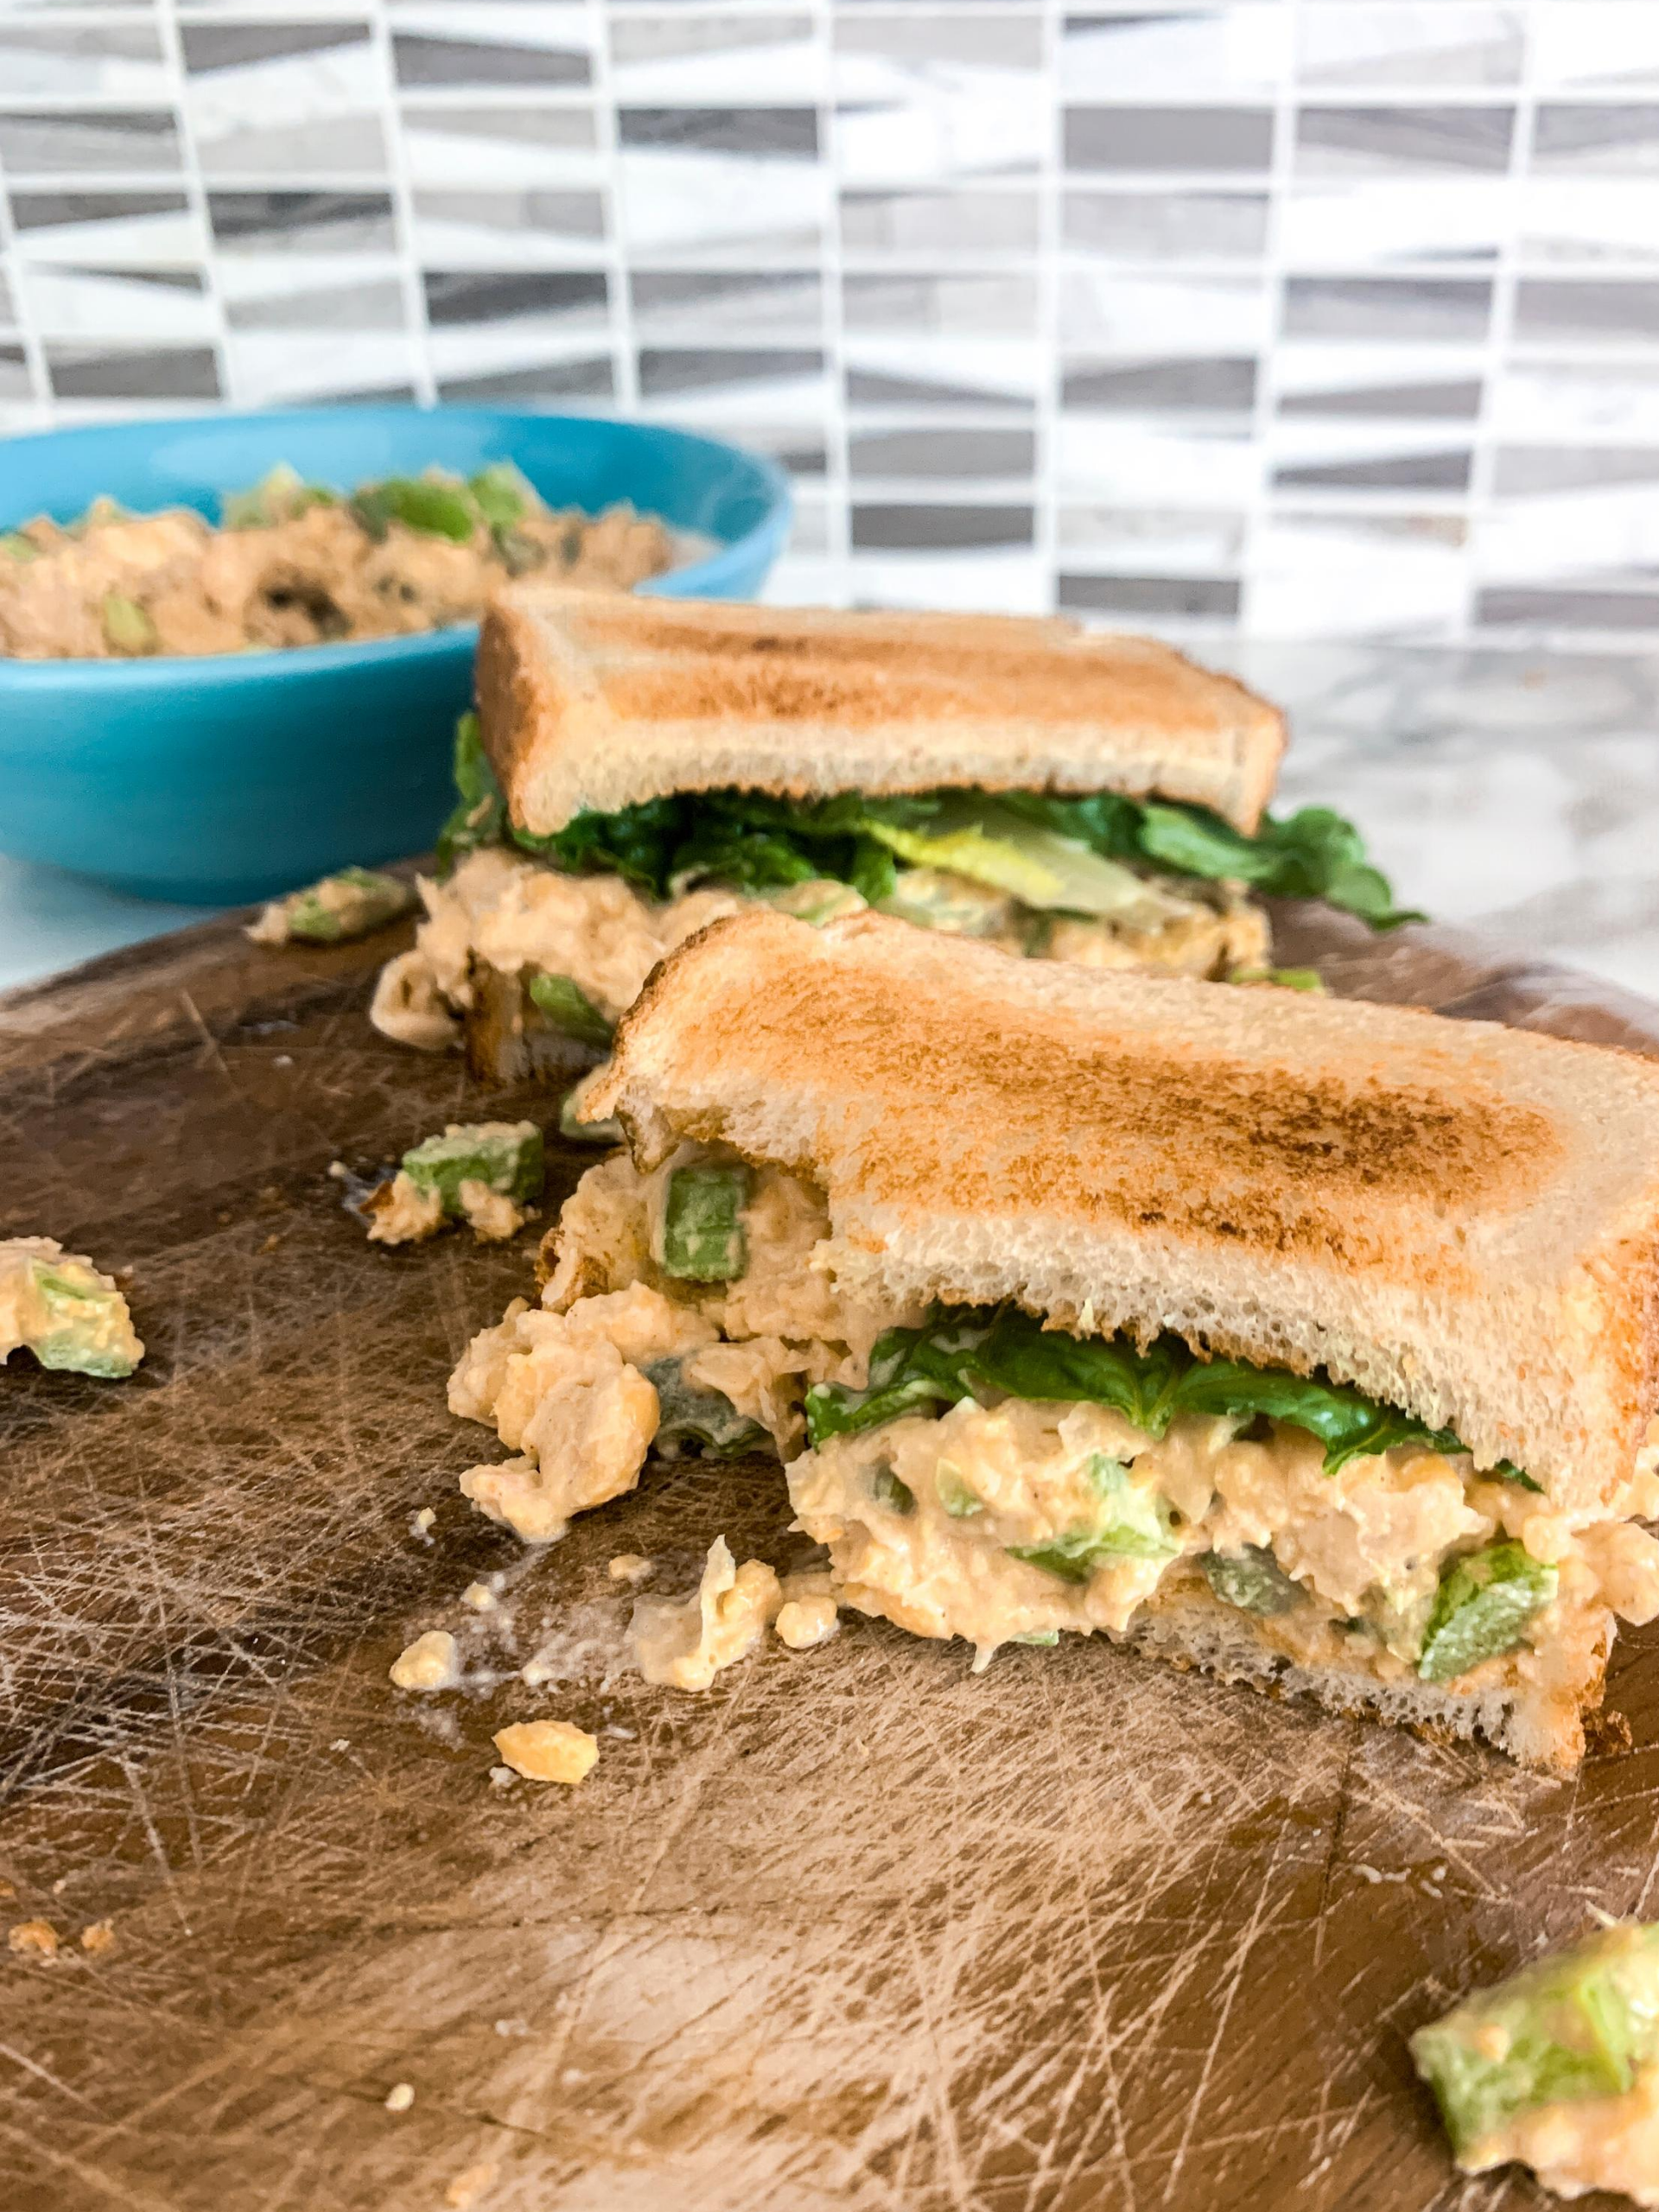 chickpea salad sandwich on cutting board